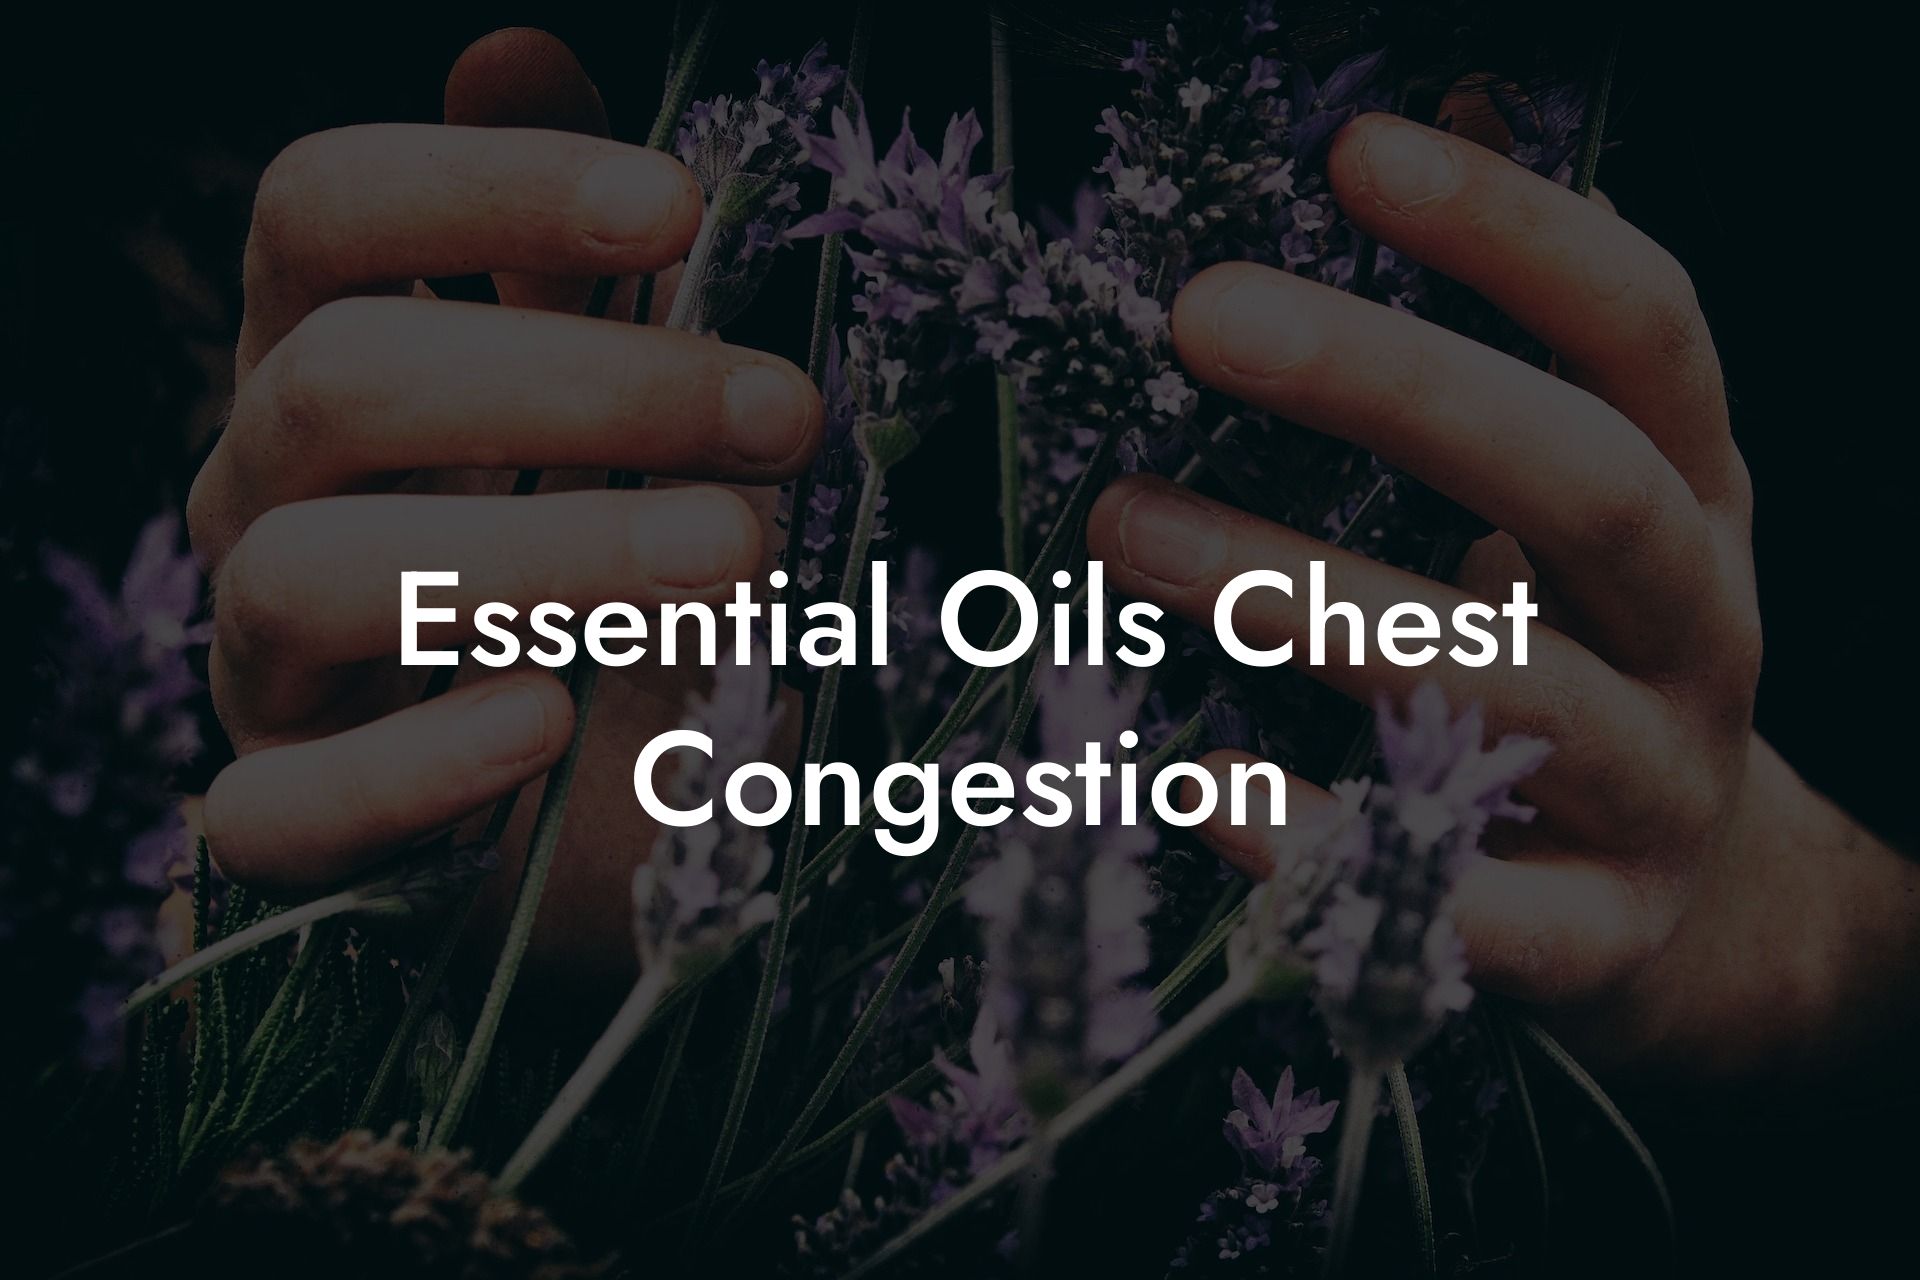 Essential Oils Chest Congestion